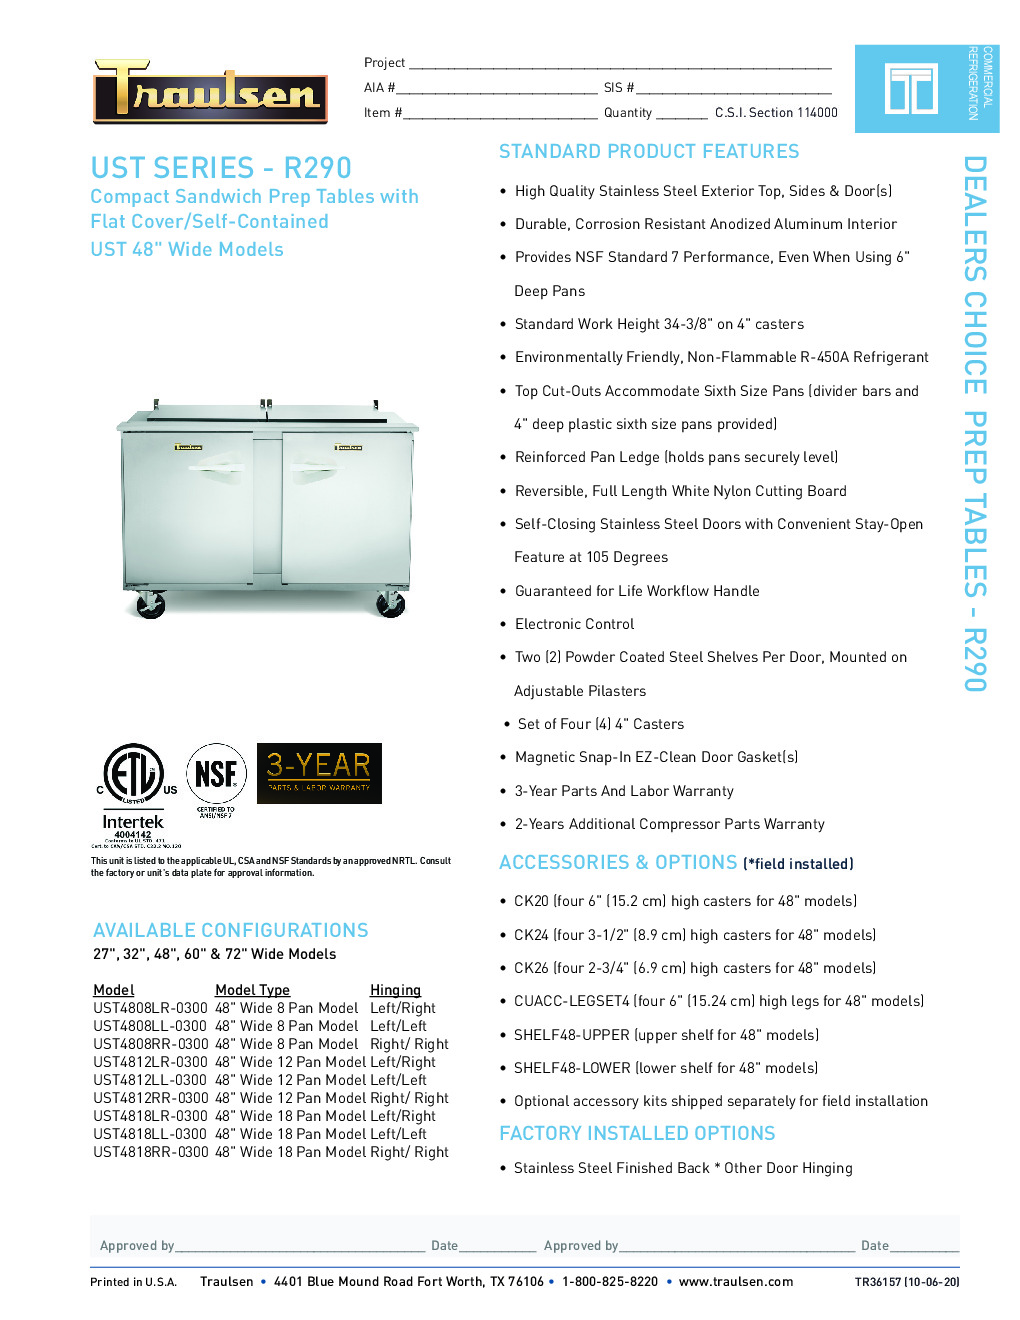 Traulsen UST4812LR-0300-SB Sandwich / Salad Unit Refrigerated Counter